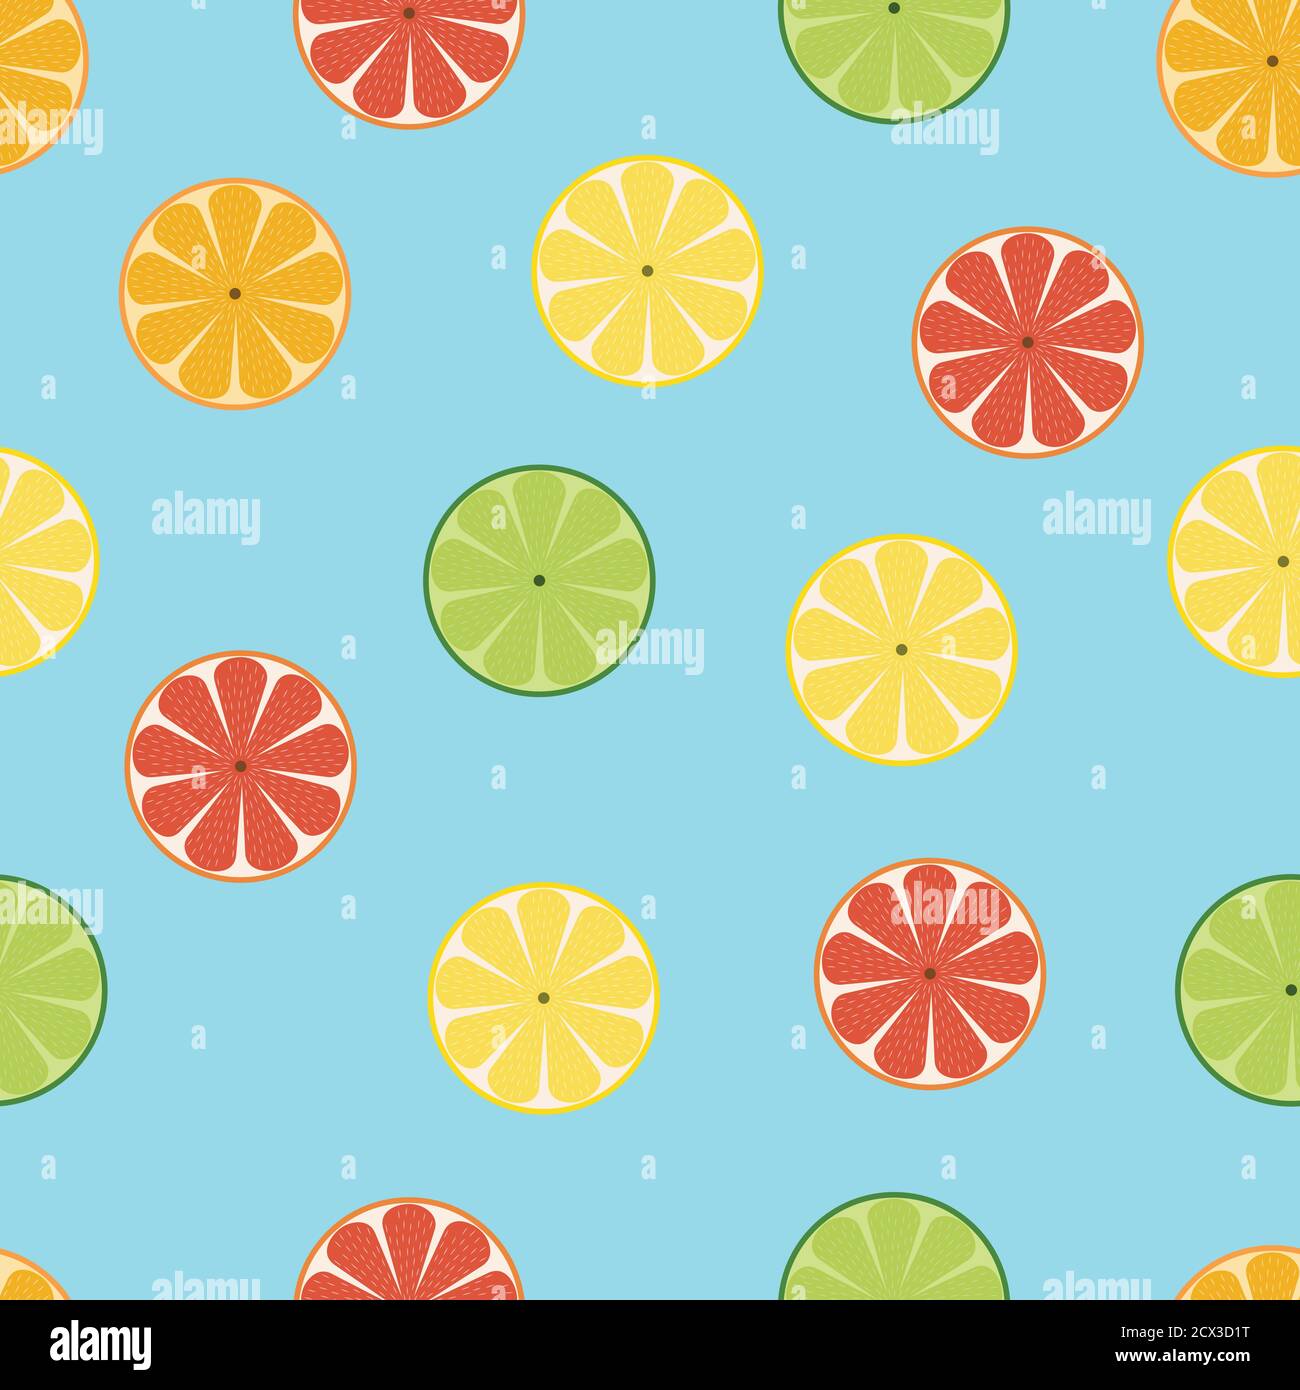 Lime, Lemon, Orange and Grapefruit slices seamless pattern design Stock Vector